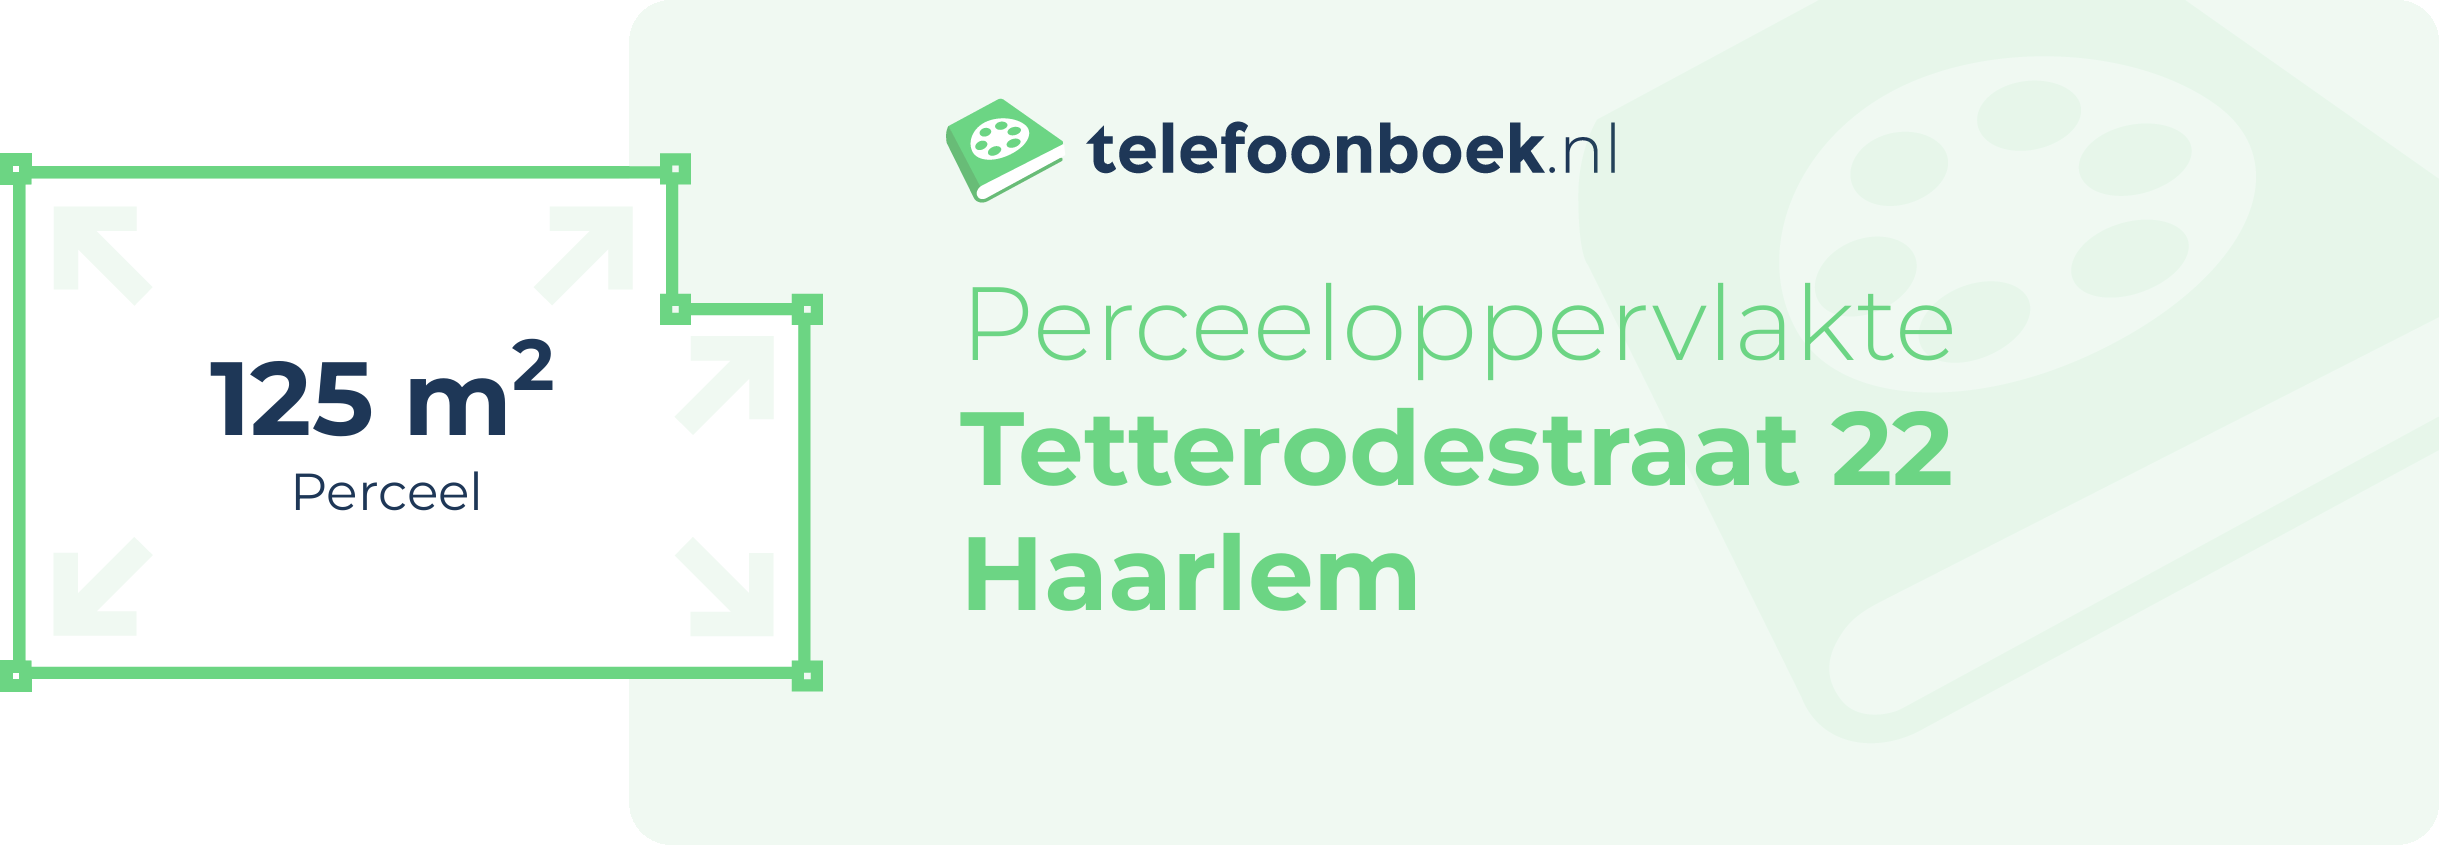 Perceeloppervlakte Tetterodestraat 22 Haarlem